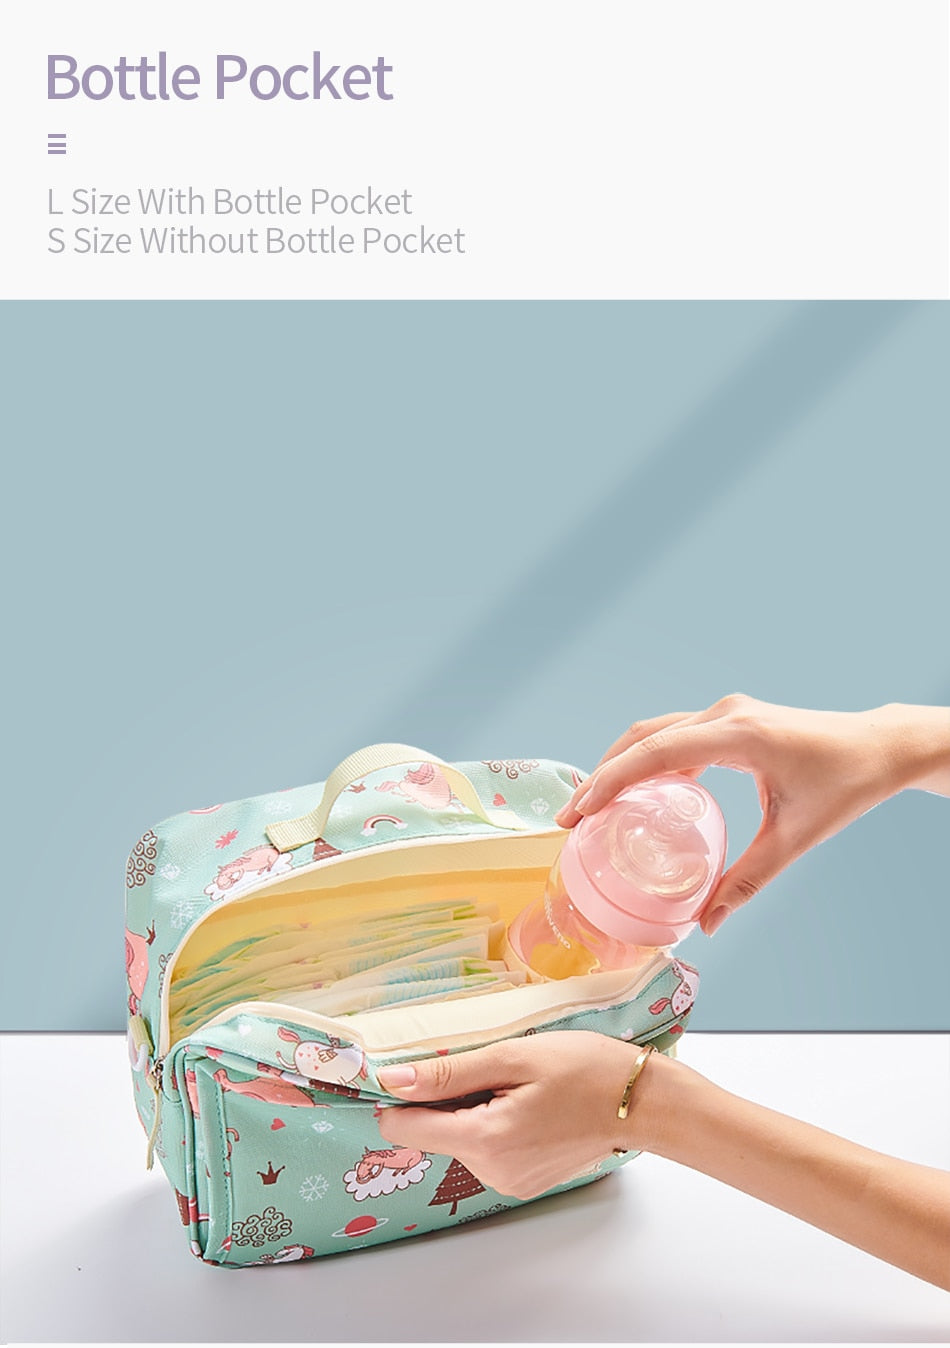 Sunveno Baby Diaper Bag for Disposable Diaper